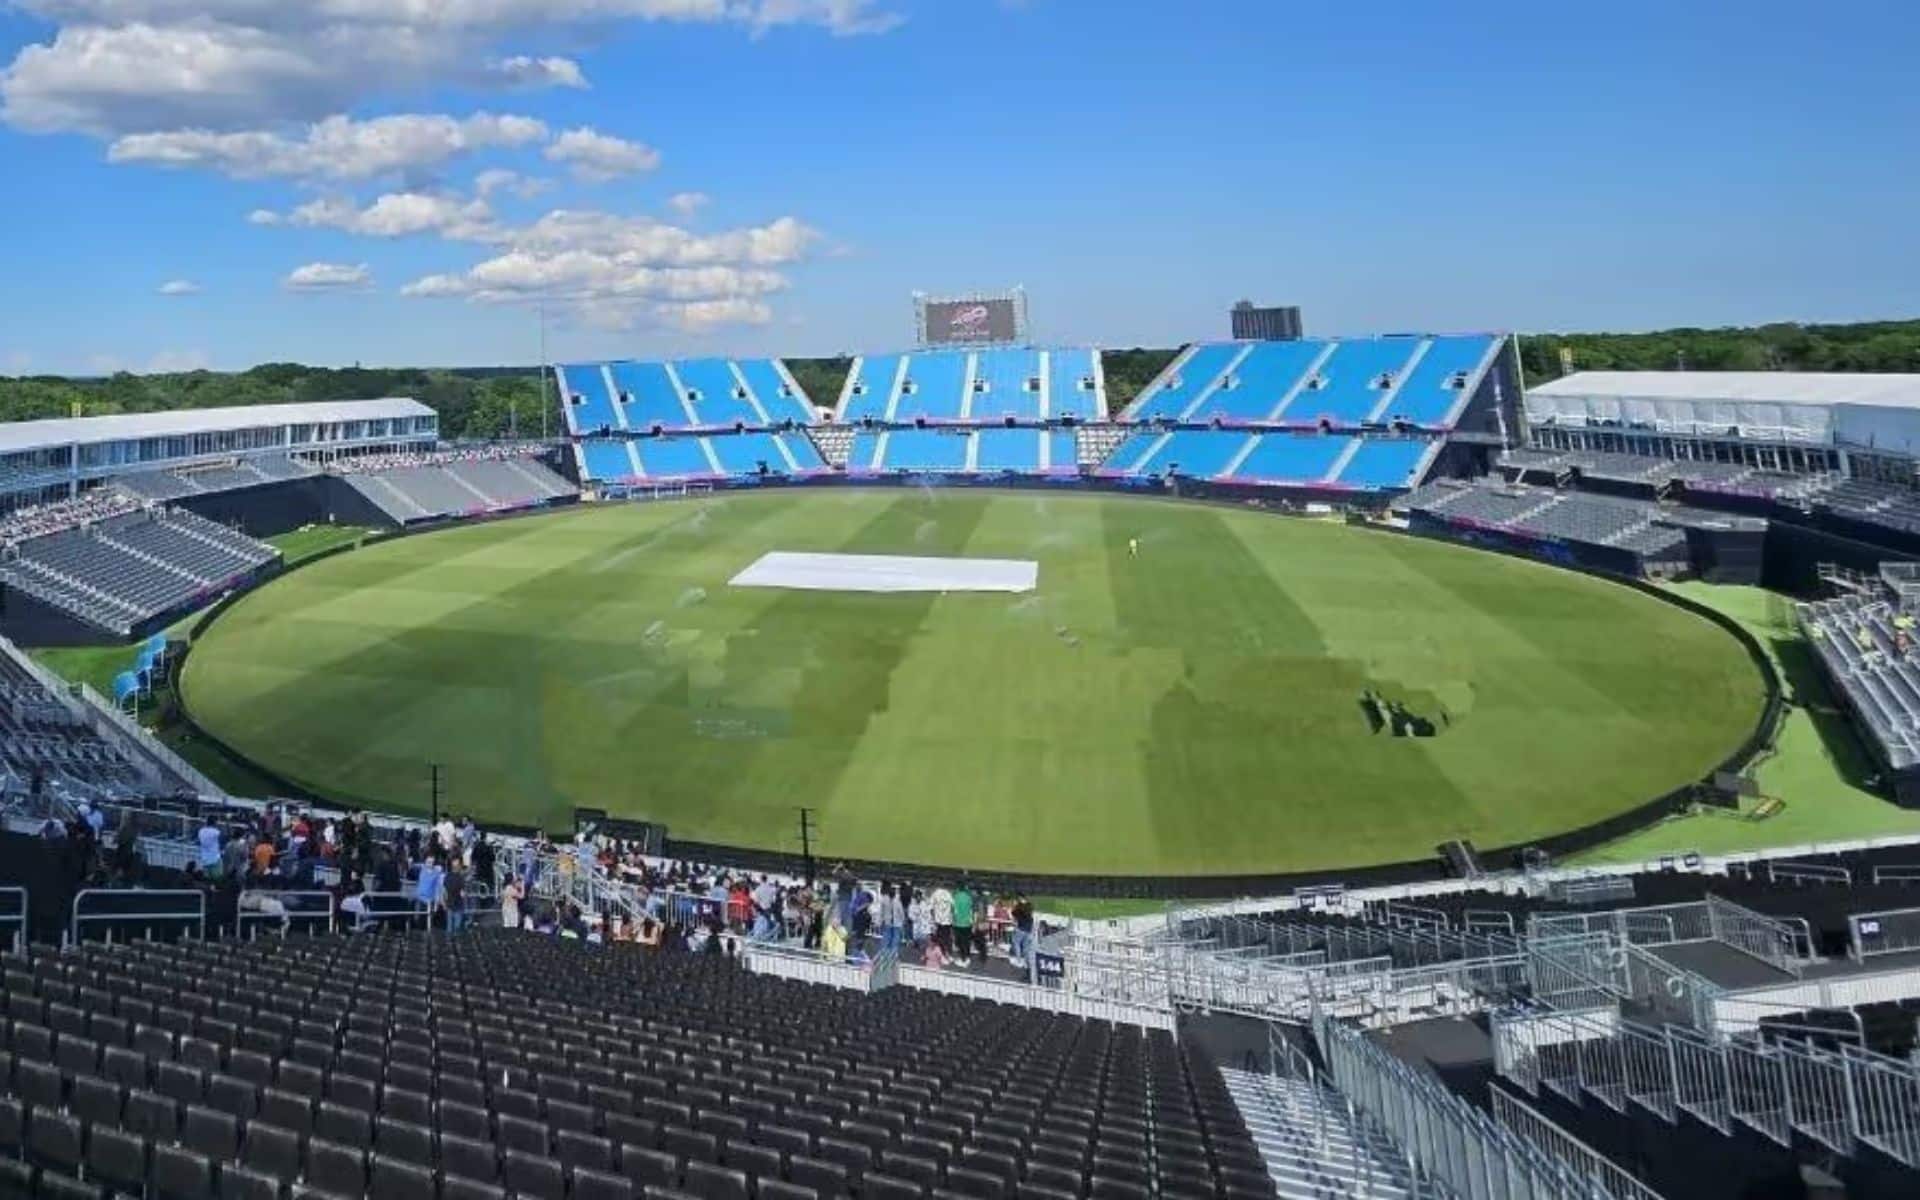 Nassau County International Cricket Stadium Pitch Report For SL Vs SA T20 World Cup Match